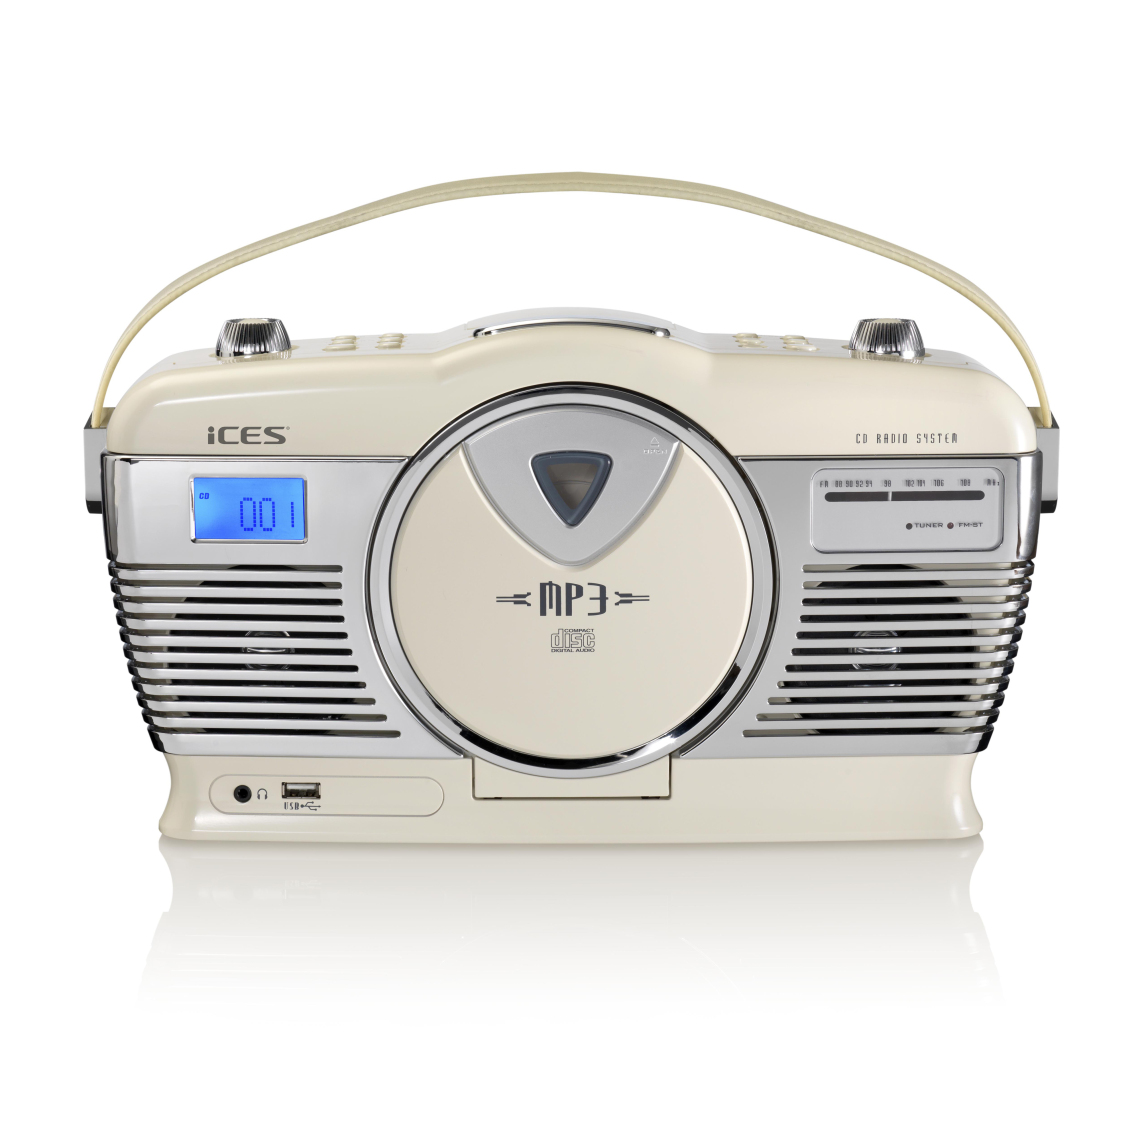 Ices - Radio portable FM retro, Lecteur CD, MP3 ISCD-33 cream white Crème - Radio